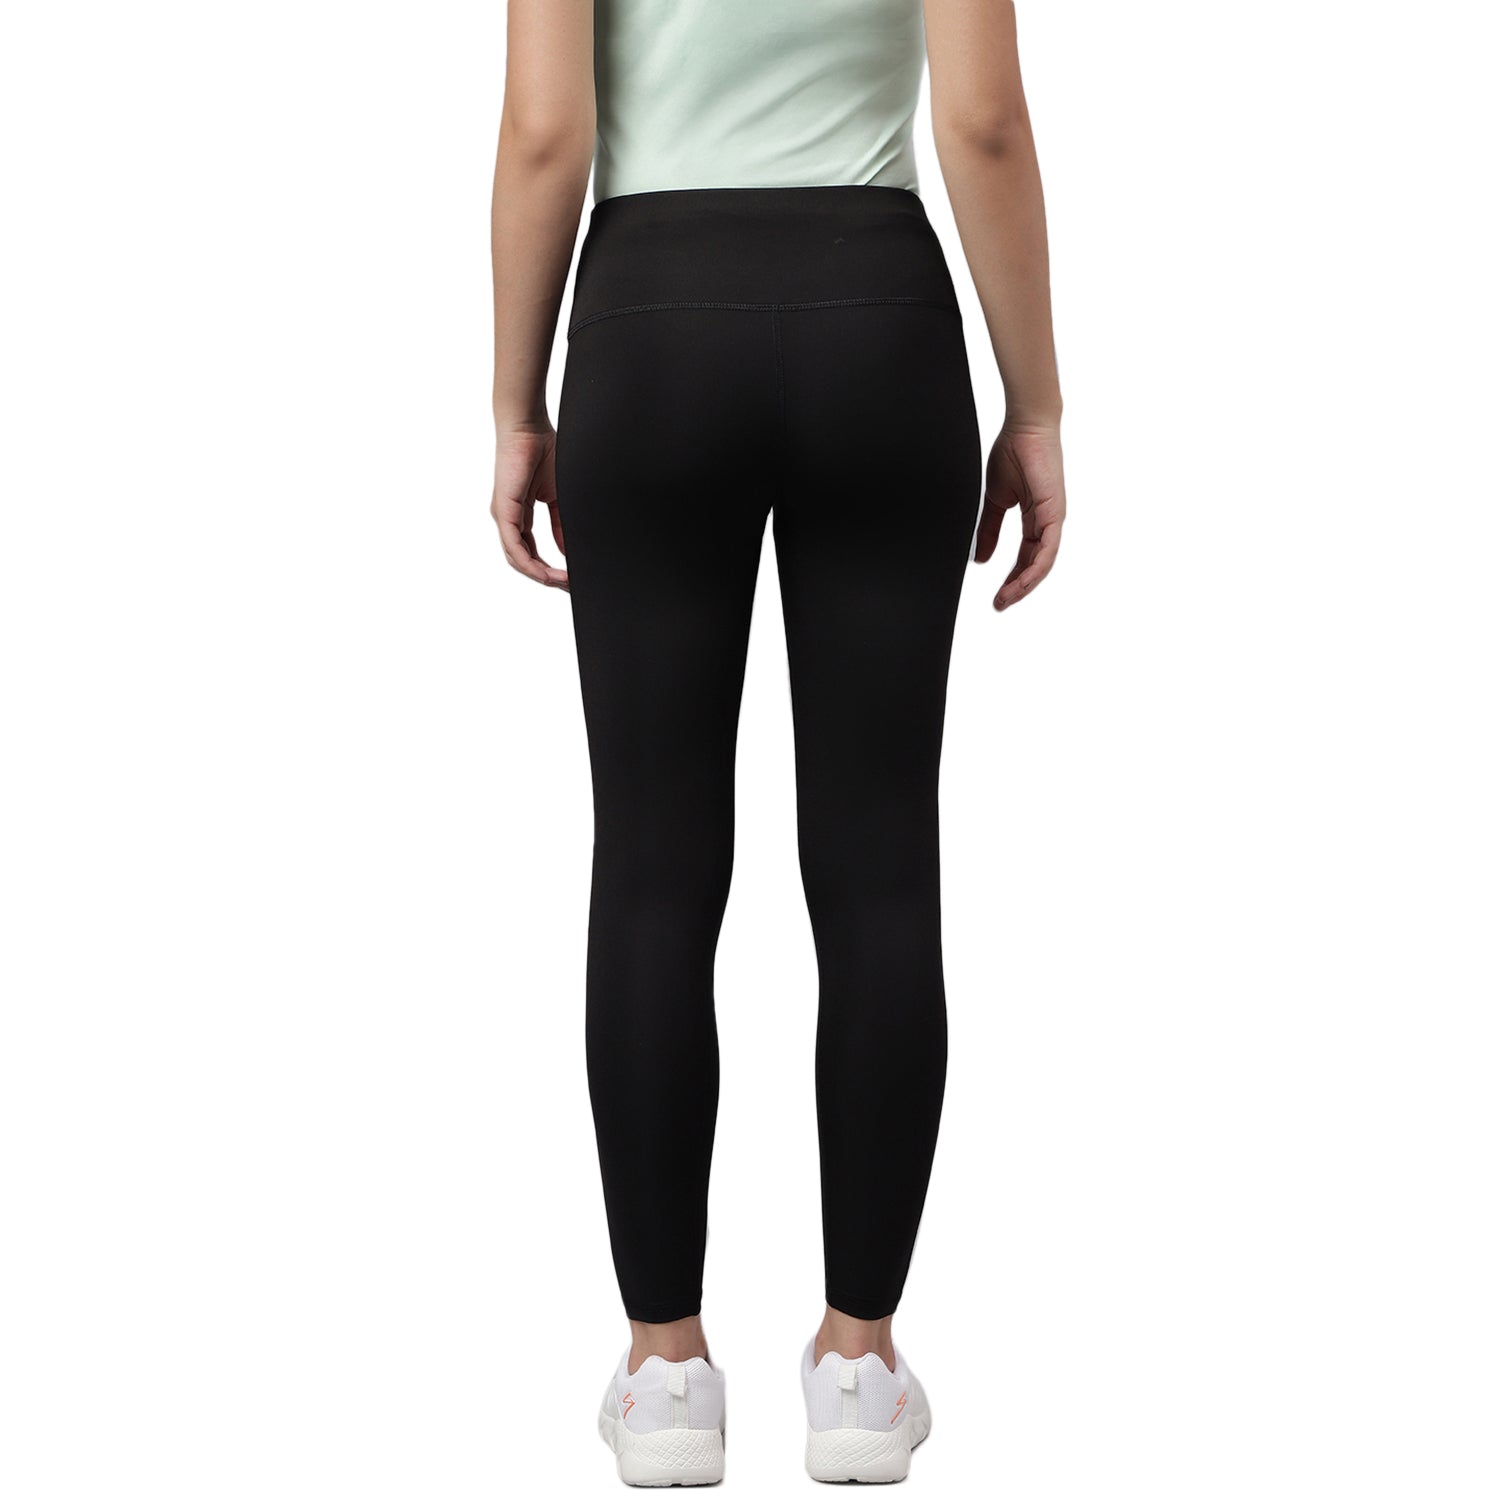 SG UNPAR By SG Womens Black Tights | Ideal for Trail Running, Fitness & Training, Jogging, Regular & Fashion Wear